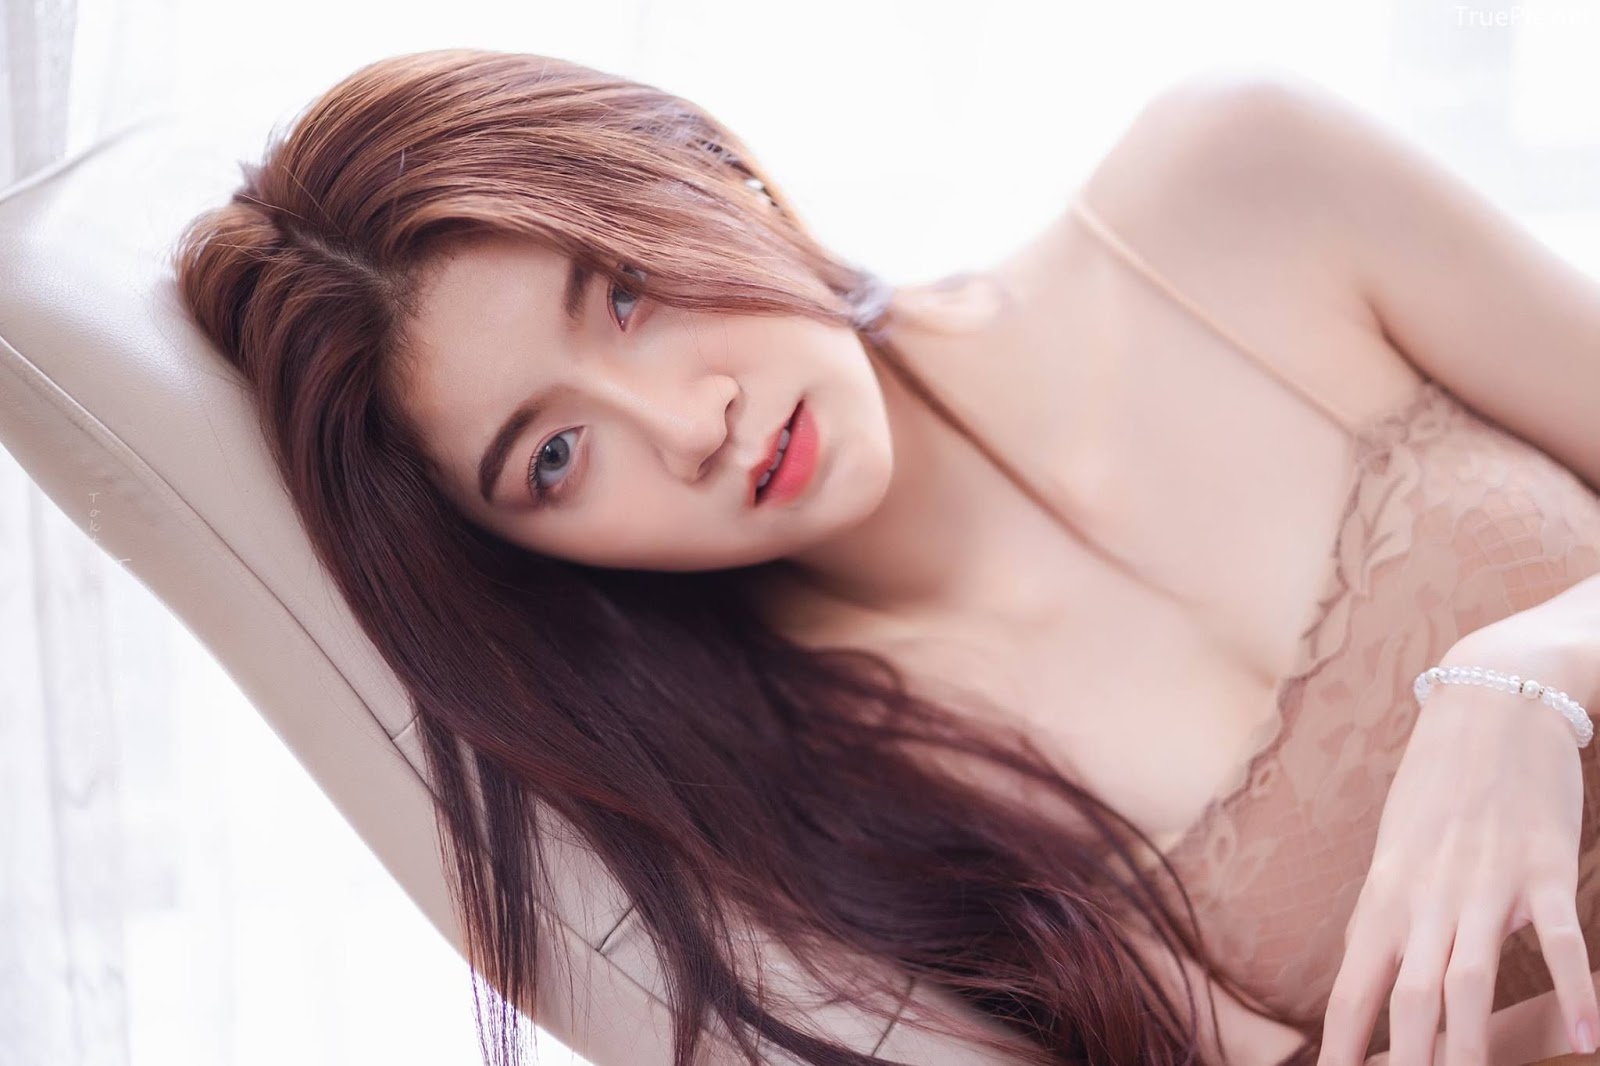 Thailand angel model Sasi Ngiunwan - Beauty portrait photoshoot - Picture 16